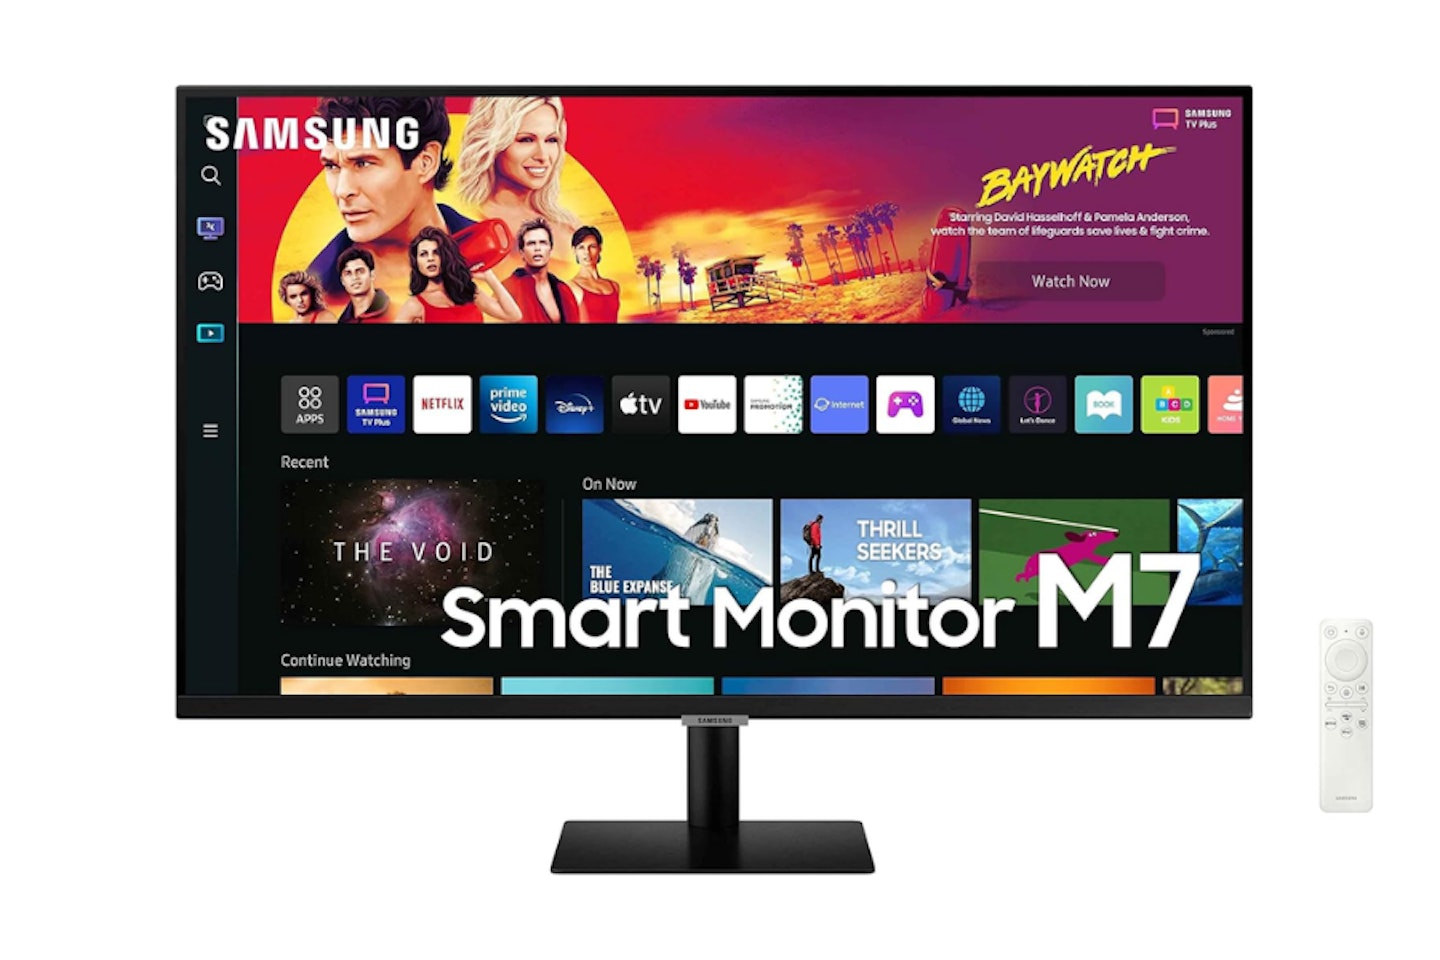 Samsung SMART MONITOR M7 32-inch 4K Smart Monitor